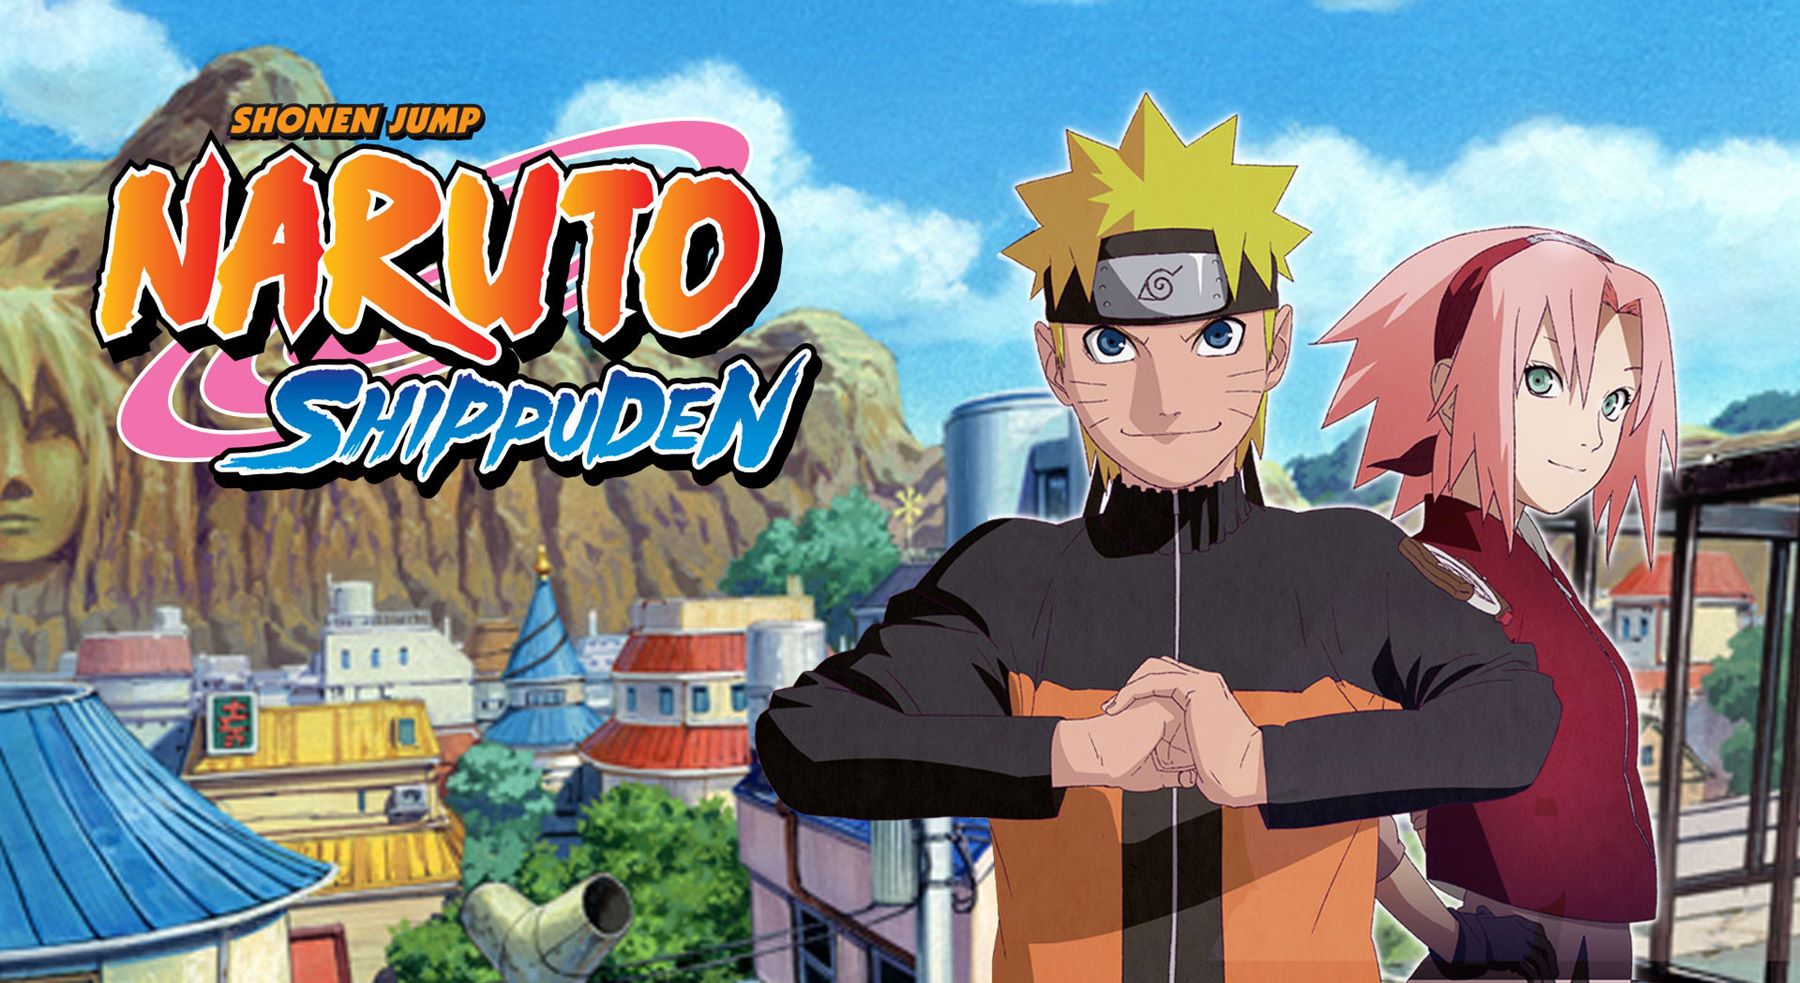 How To Watch Naruto Shippuden In English On Crunchyroll